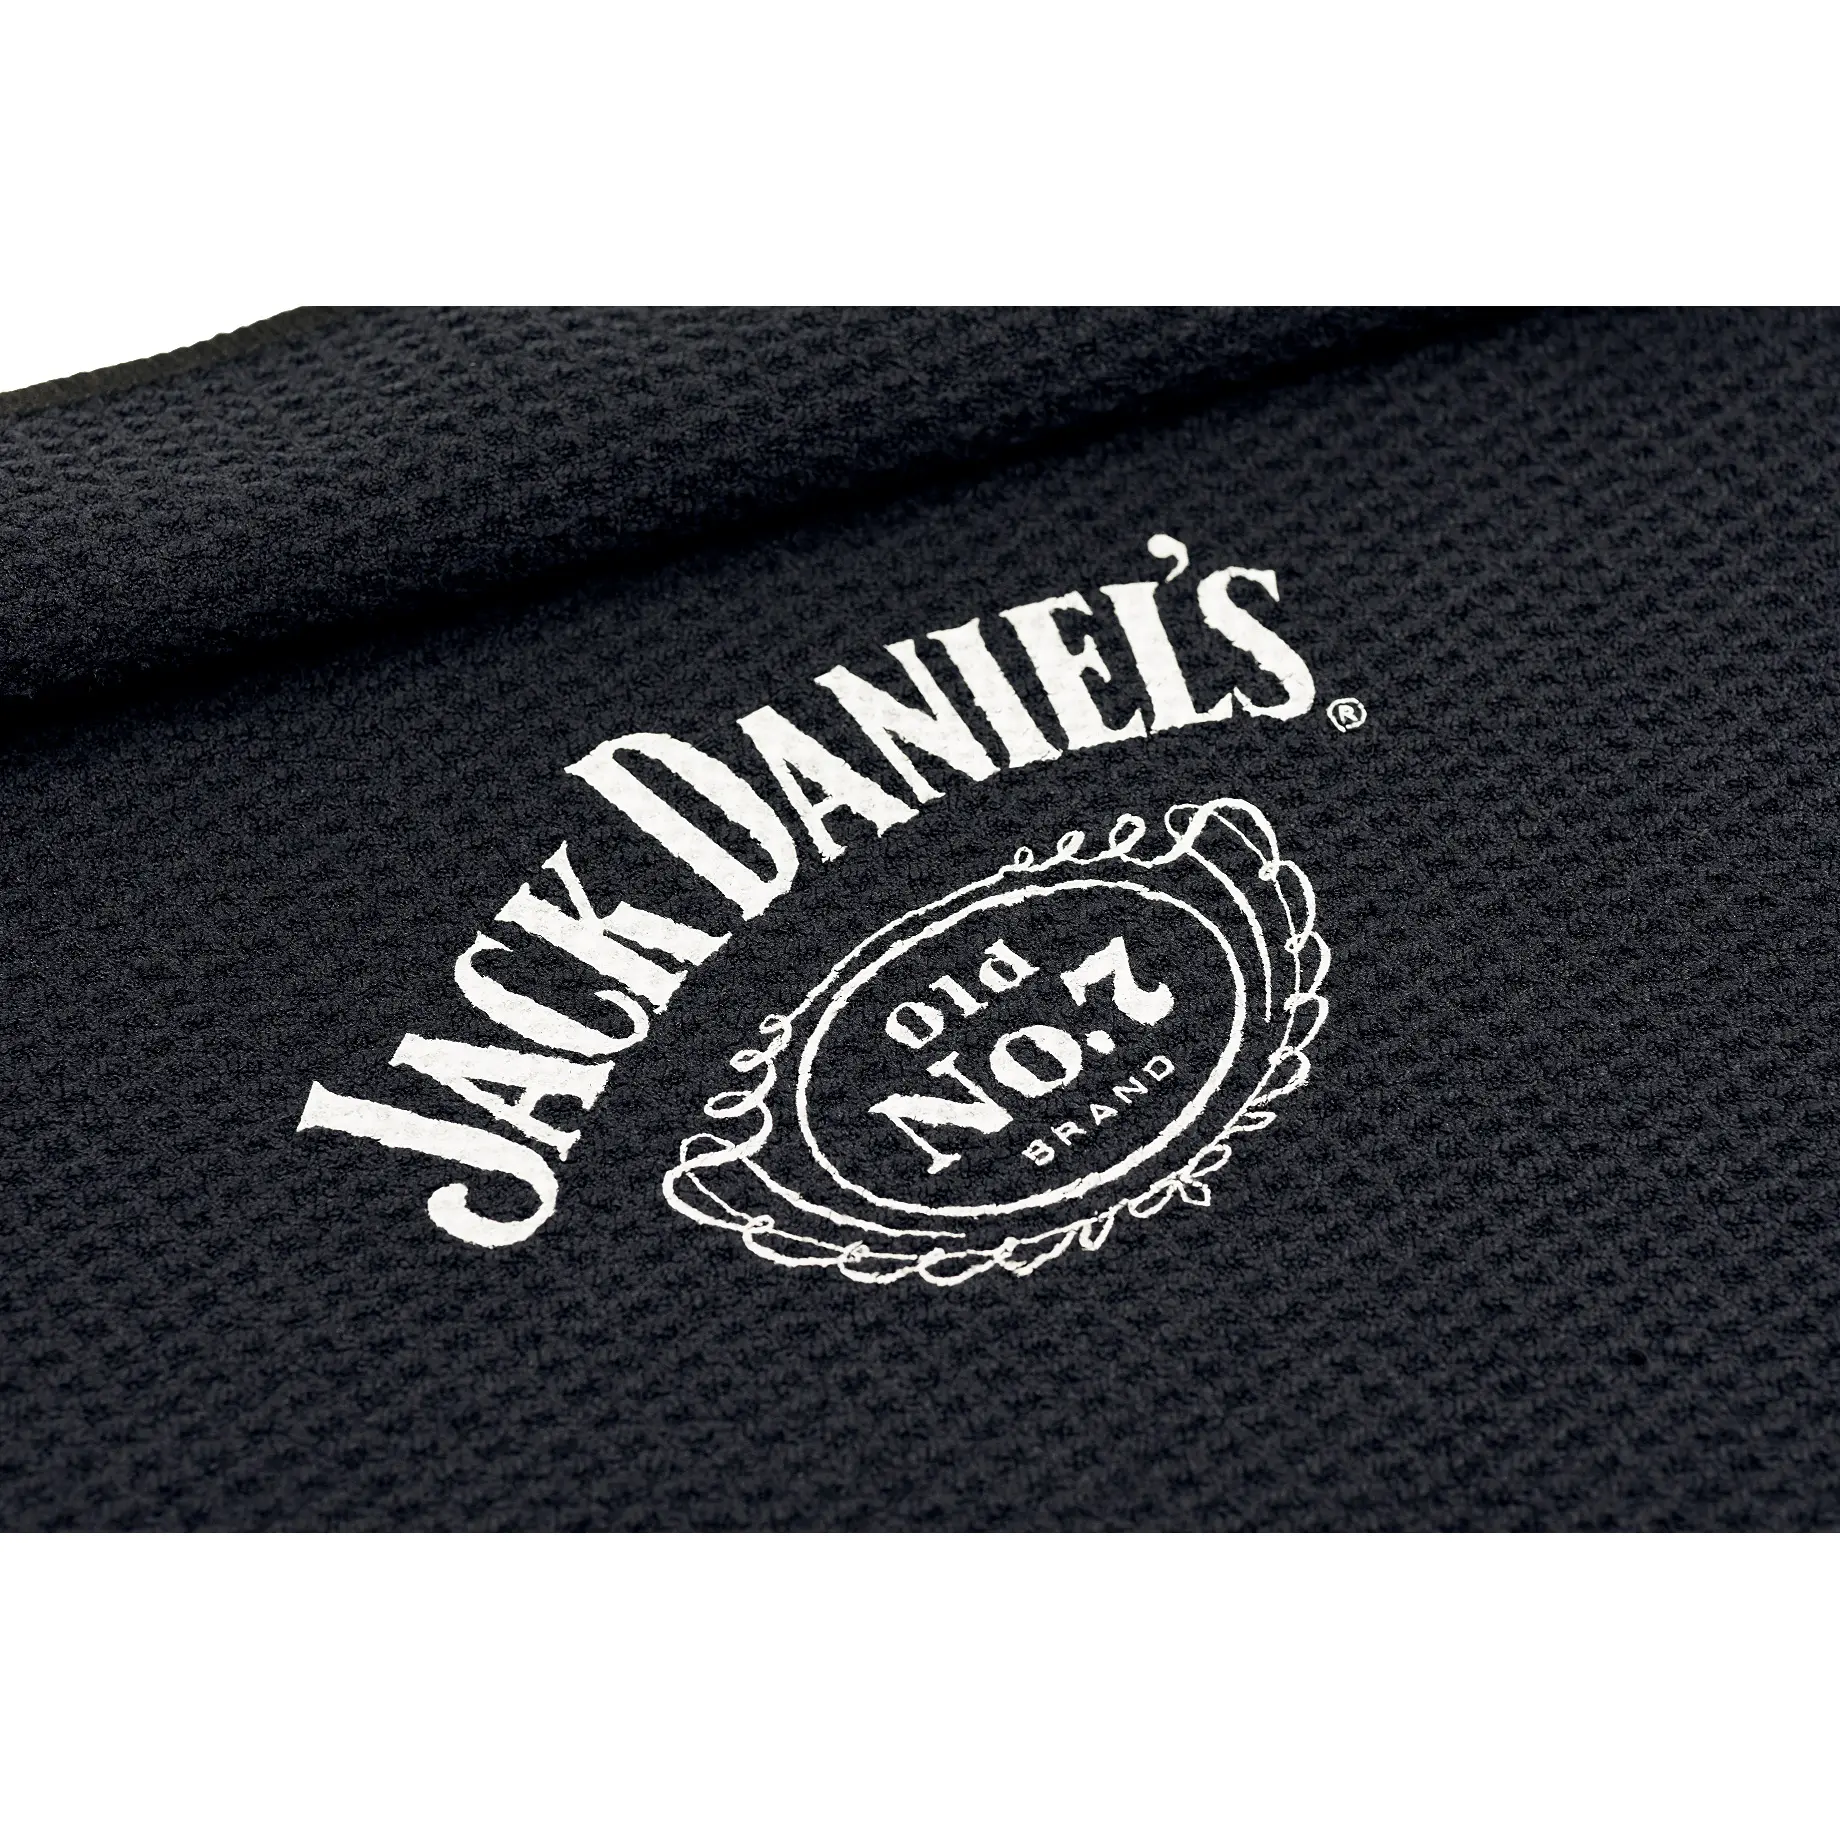 Mission - Jack Daniels Handtuch